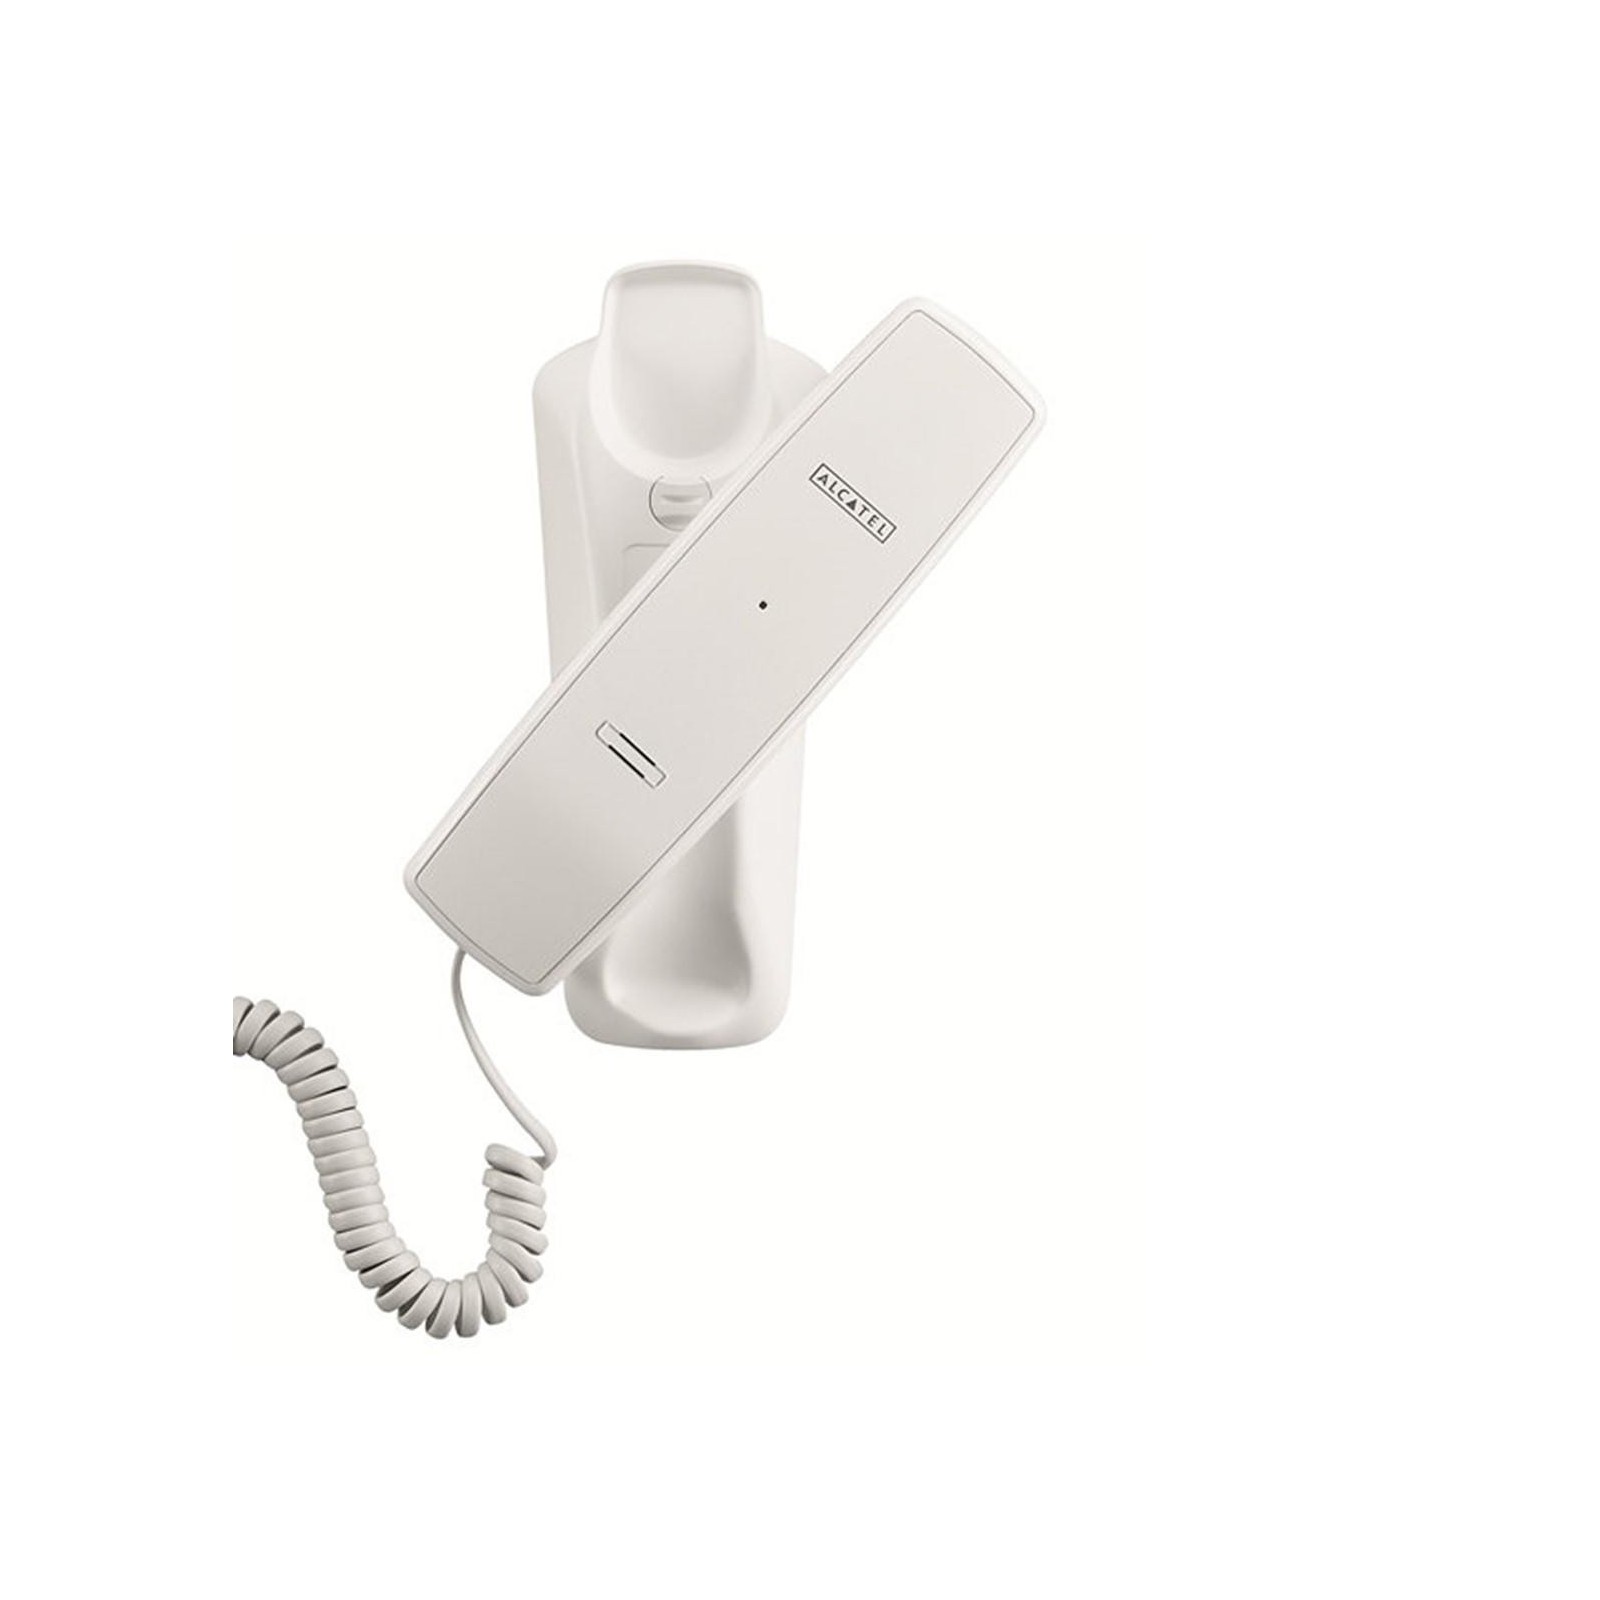 Teléfono Fijo Monopieza Alcatel Temporis 10 Blanco - Indicad